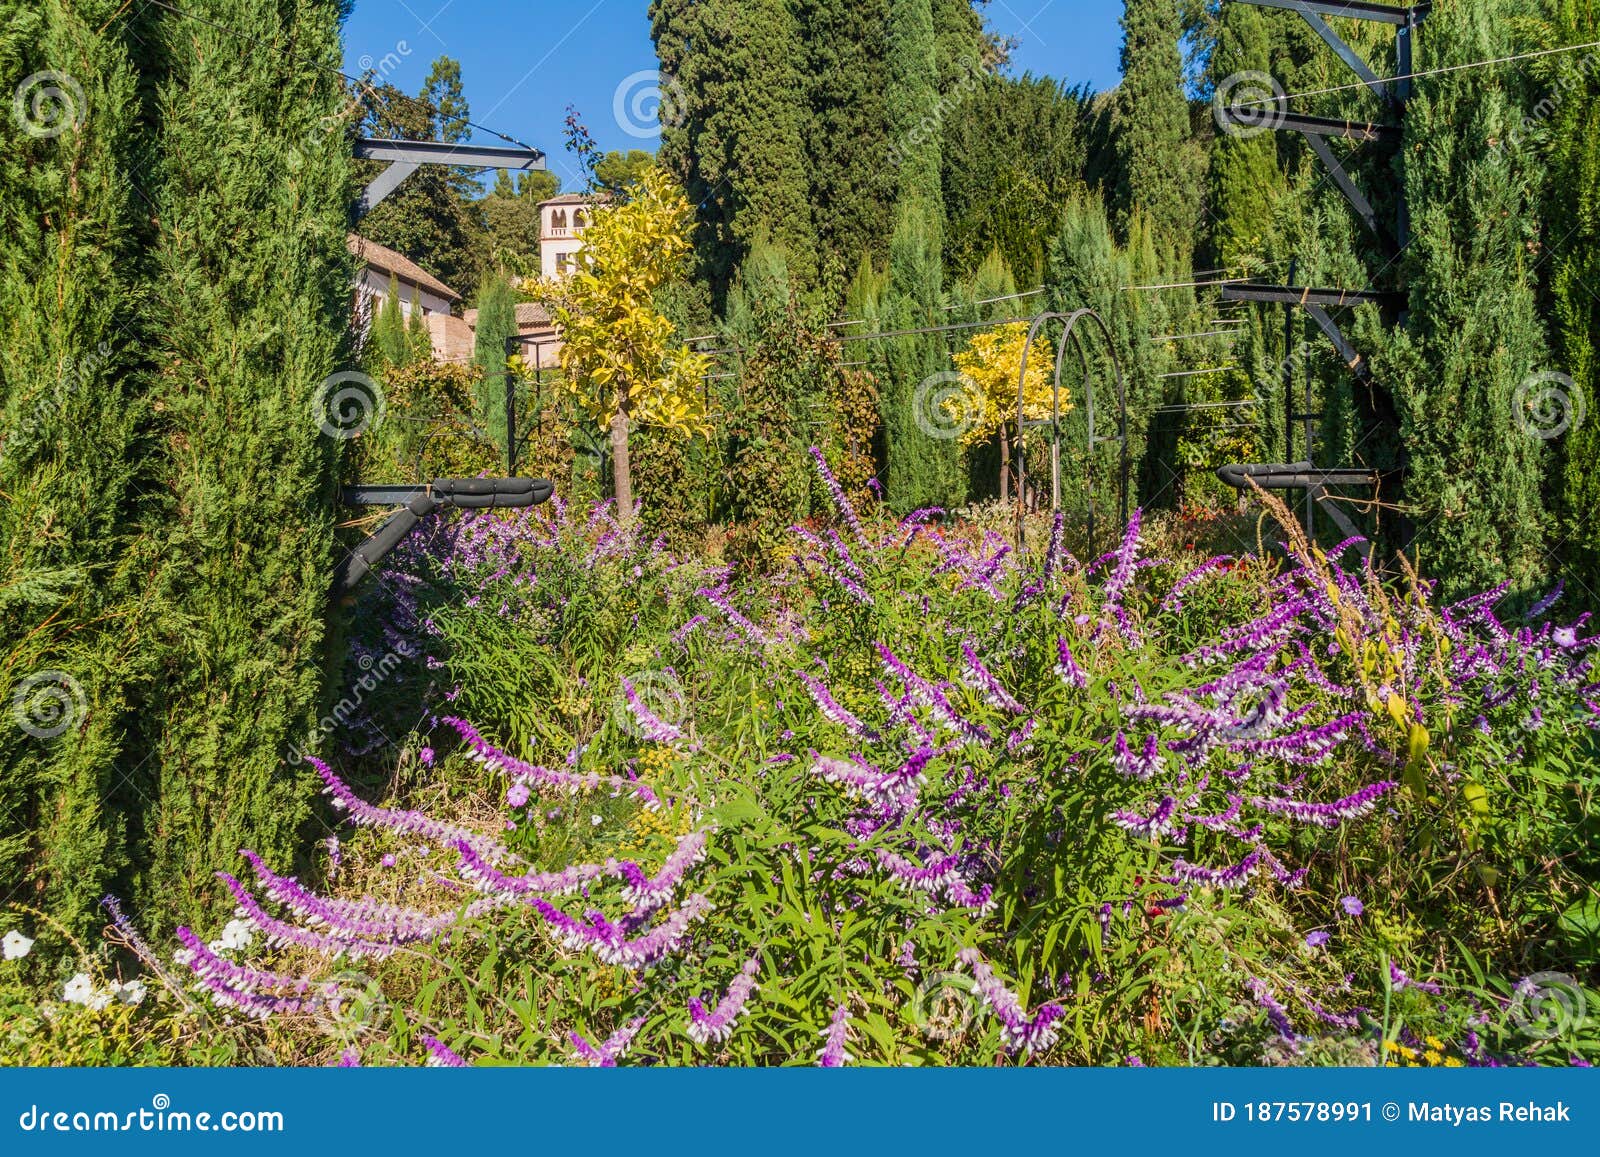 jardines del generalife gardens at alhambra in granada, spa